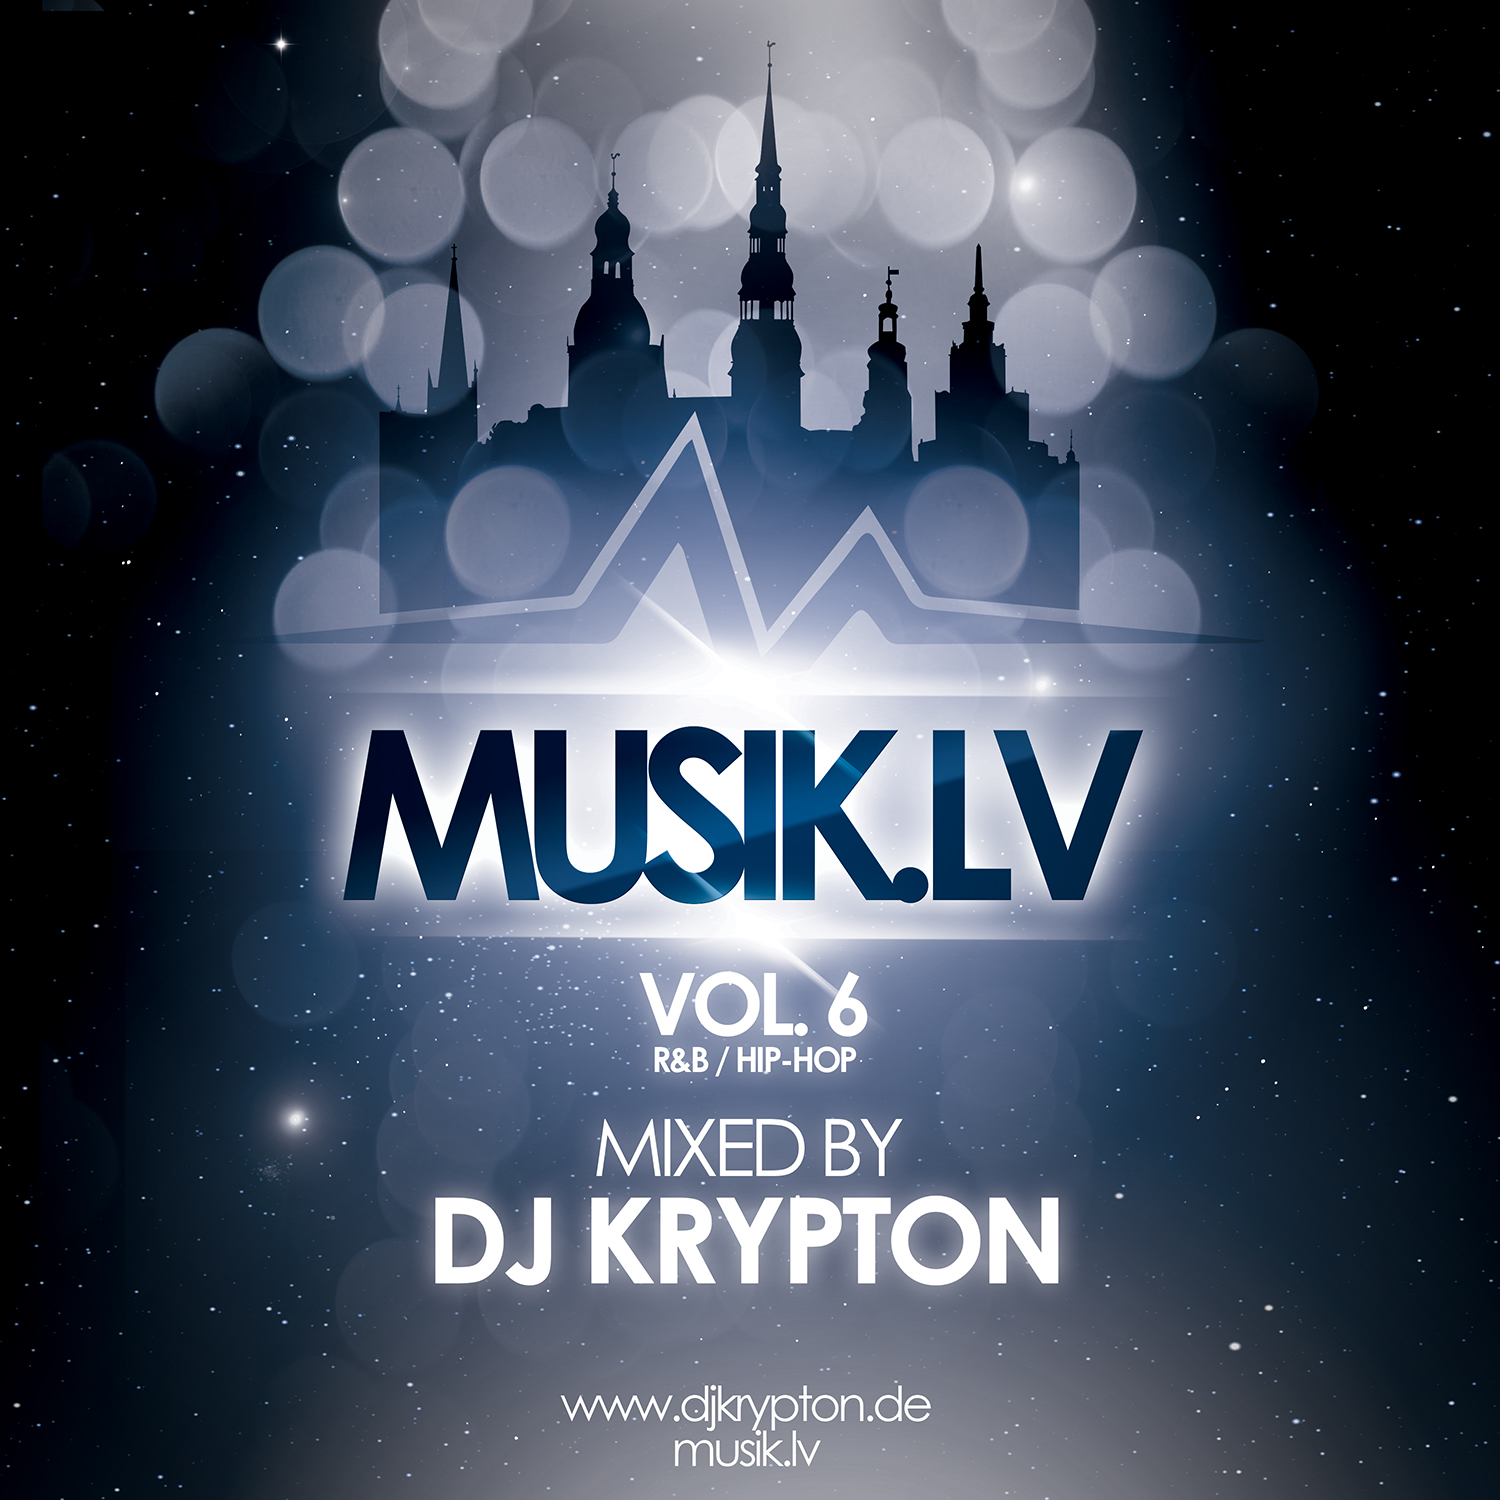 Musik-lv-vol-6-cover